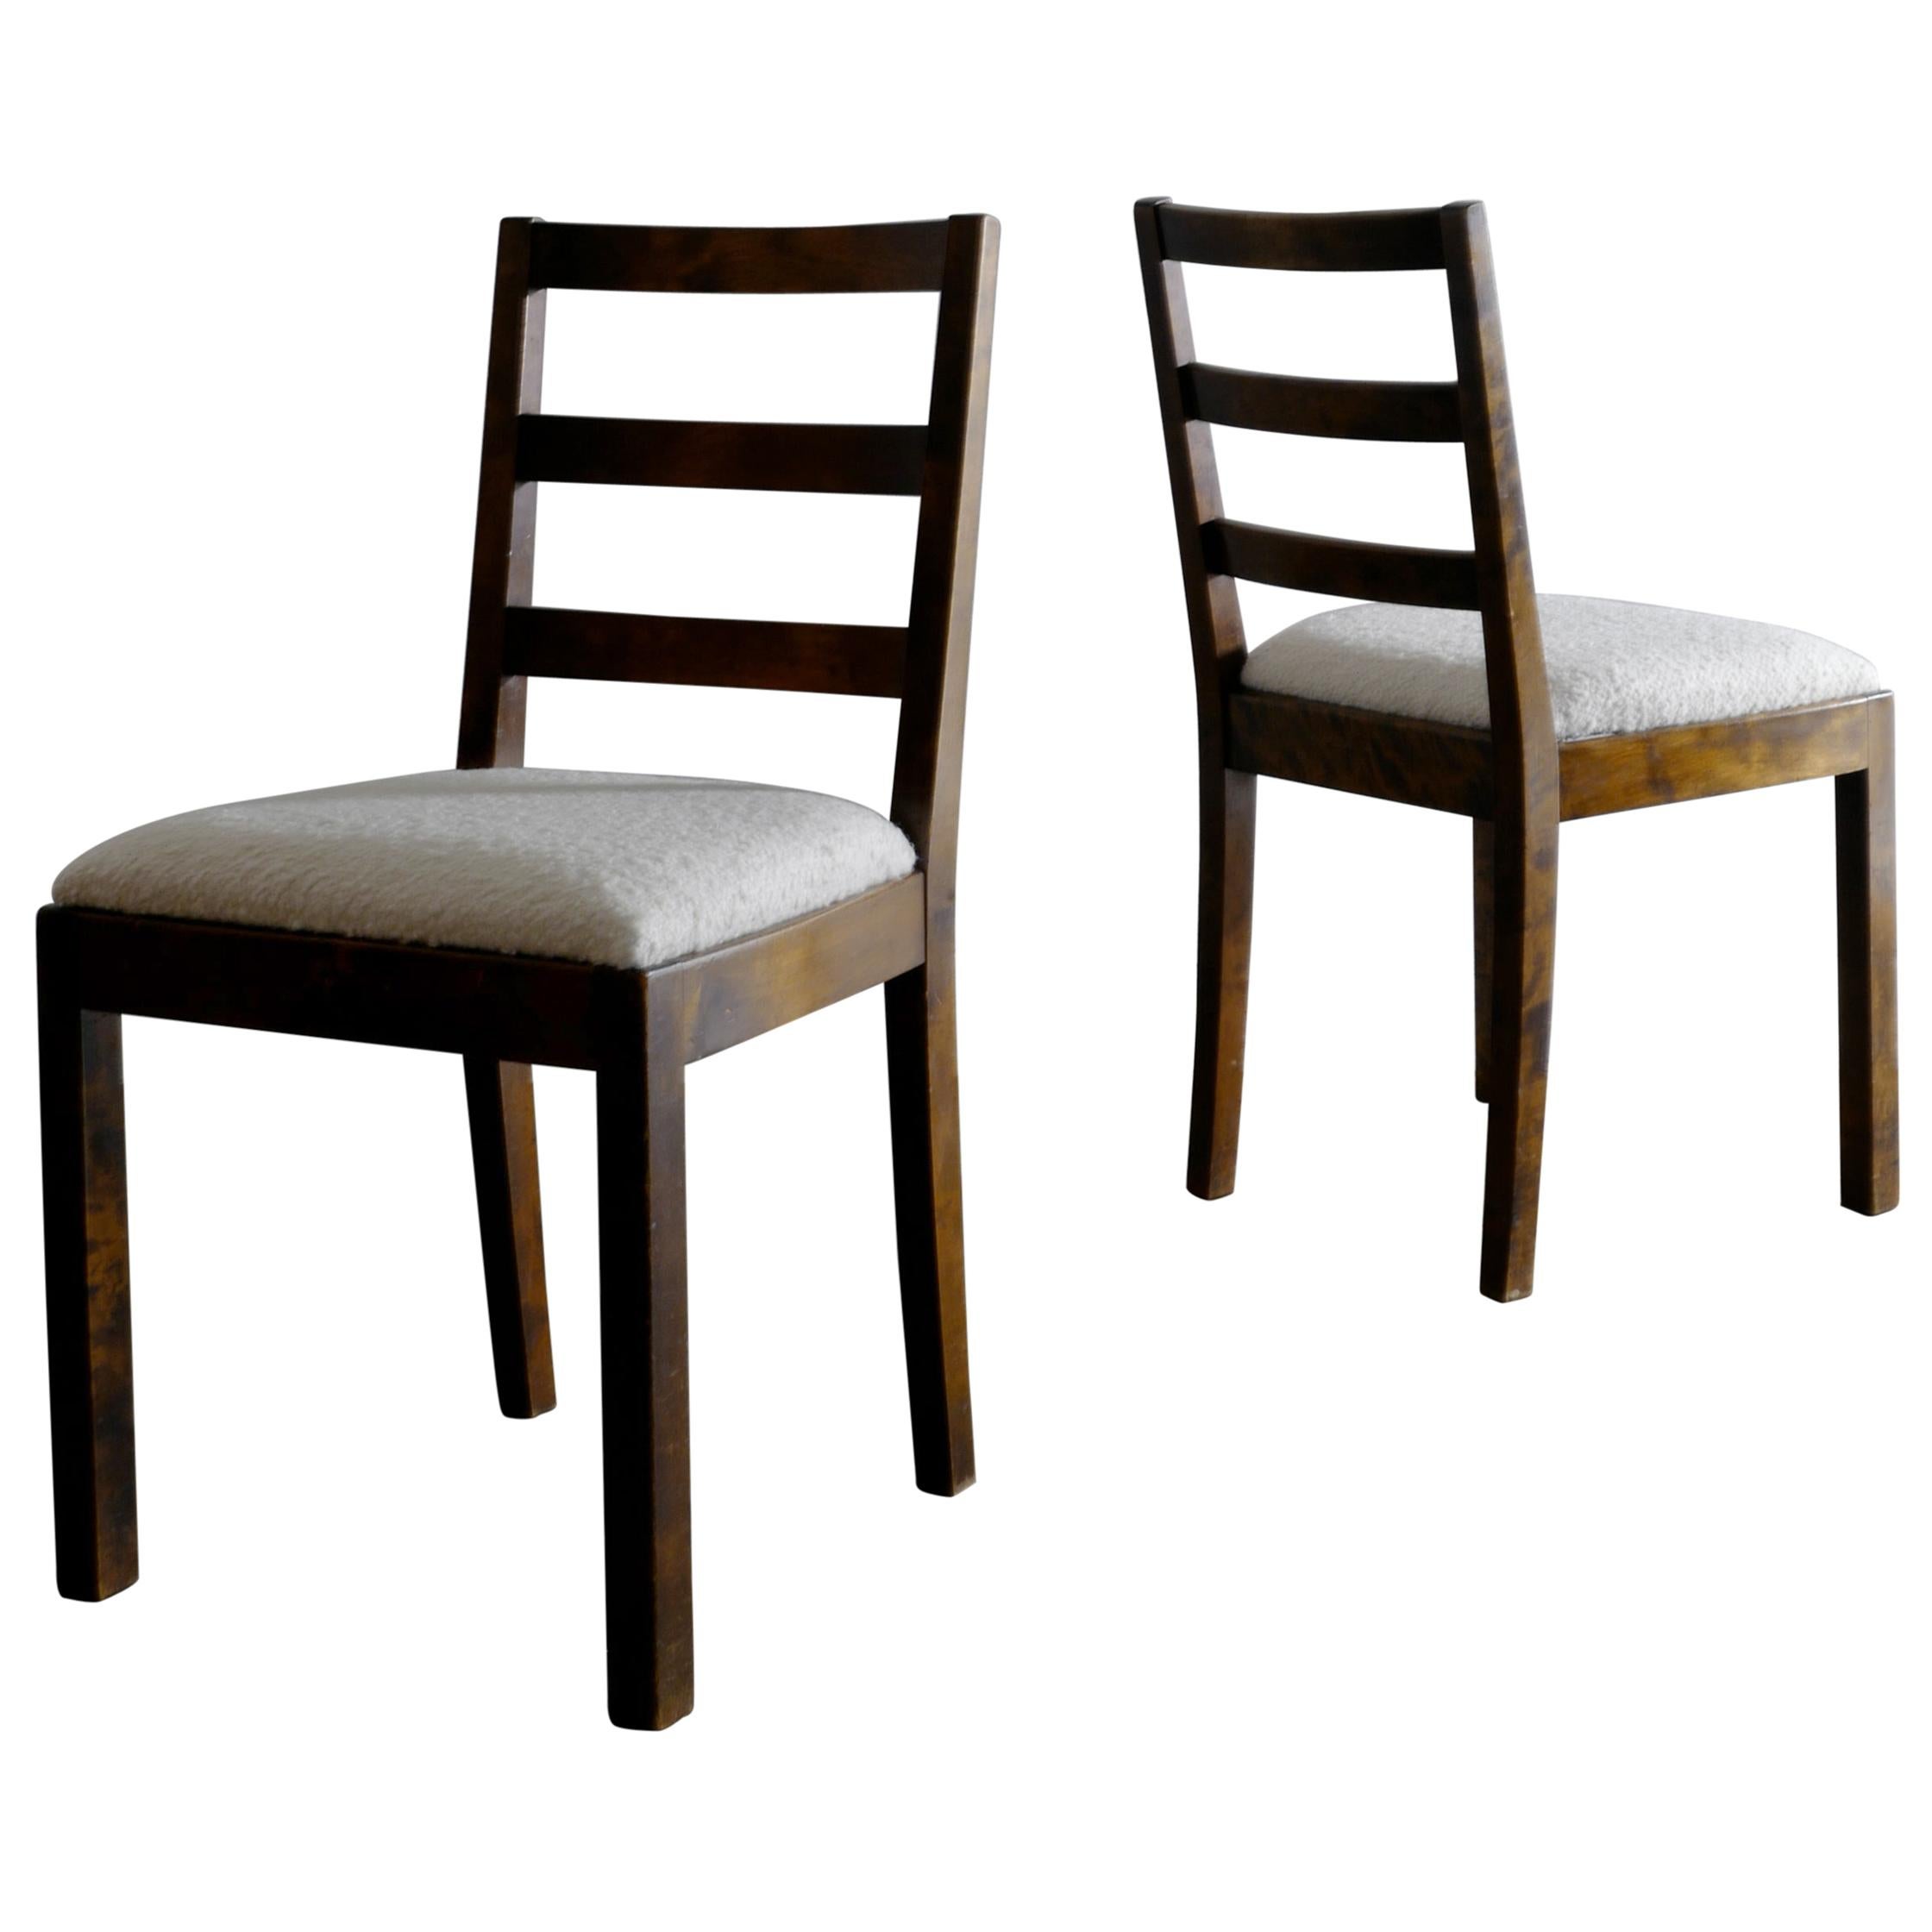 Pair of Axel Einar Hjorth "Typenko" Chairs for Nordiska Kompaniet, Sweden, 1930s